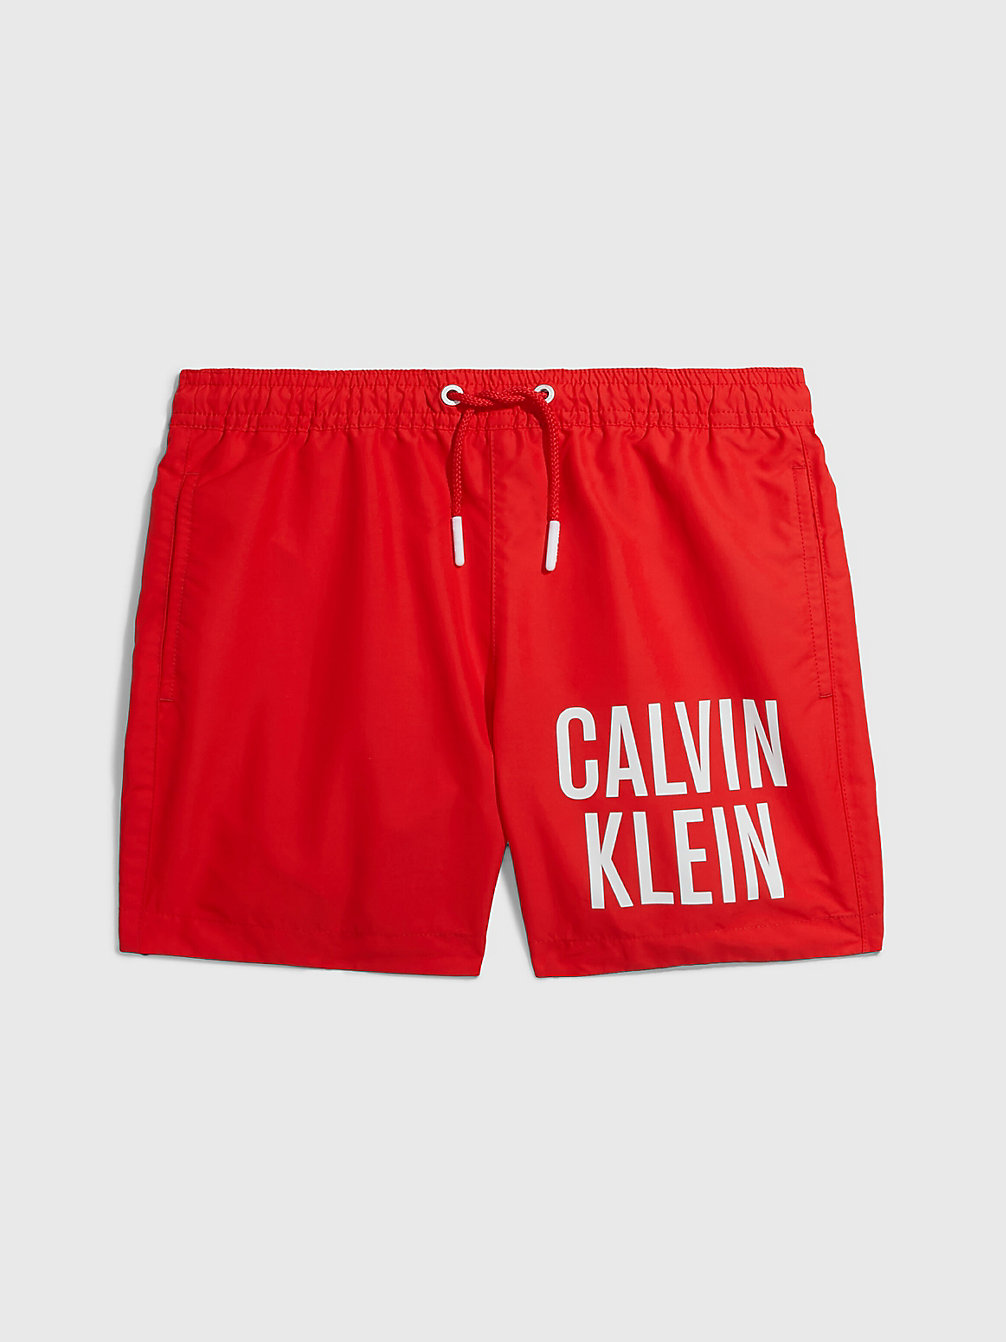 CAJUN RED > Chłopięce Bokserki Kąpielowe - Intense Power > undefined boys - Calvin Klein